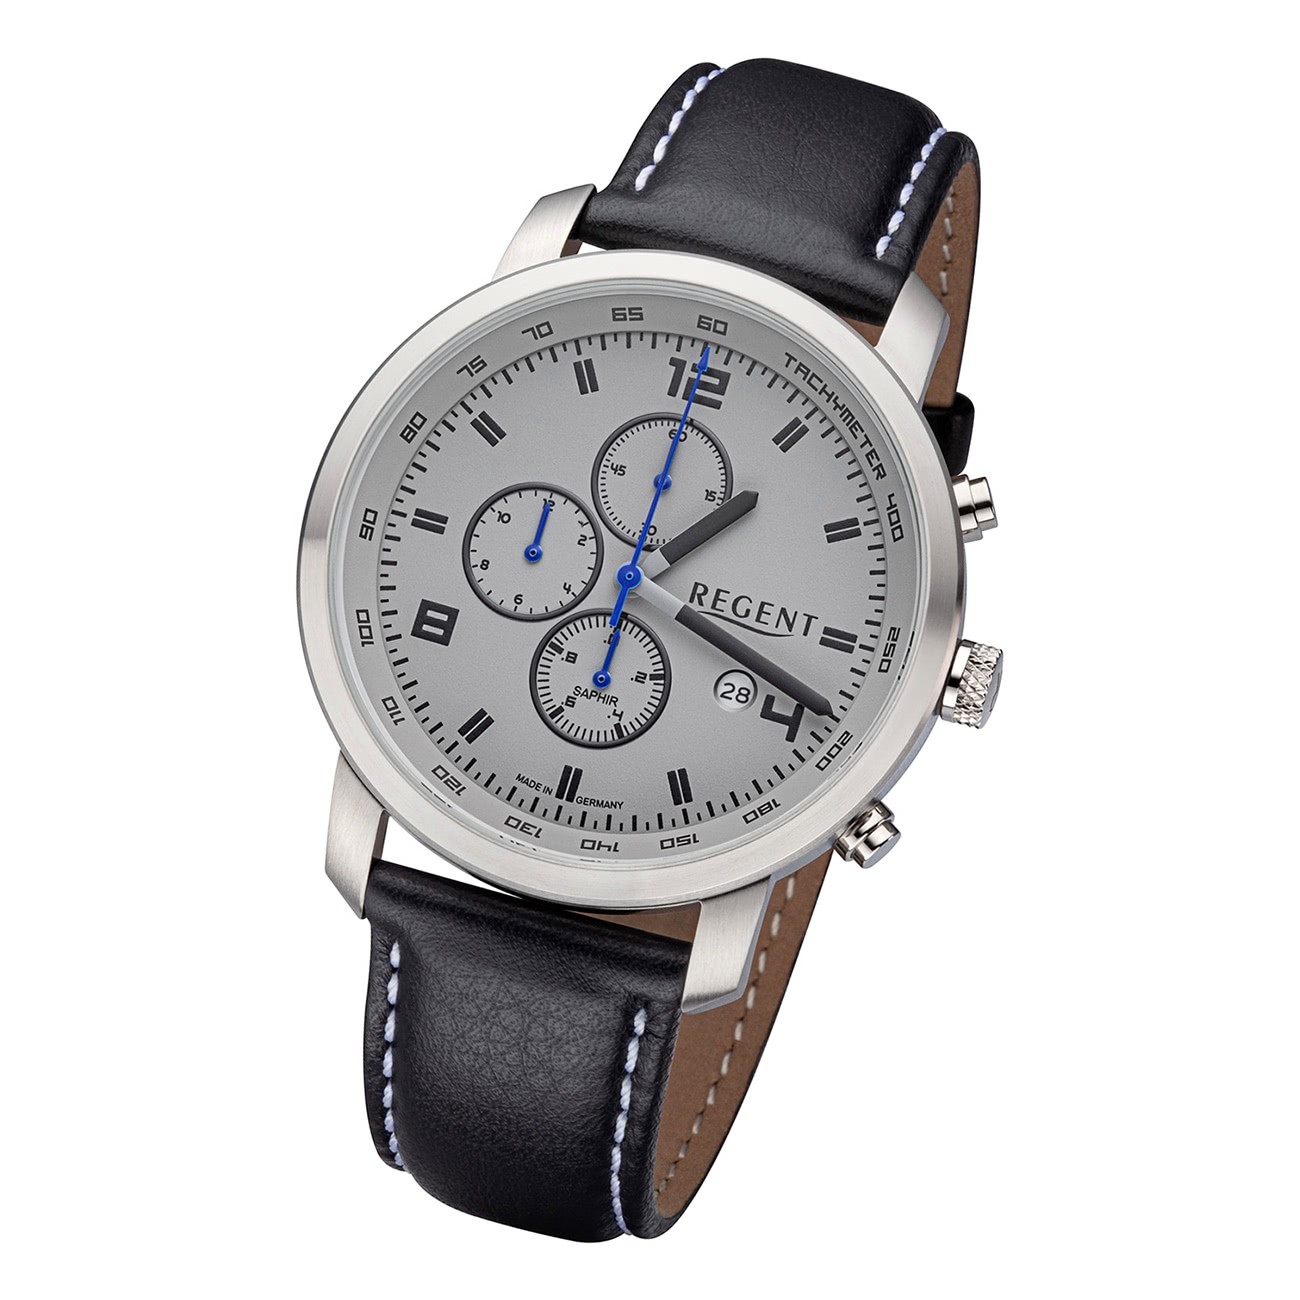 Regent Herren Armbanduhr Analog GM-2109 Quarz-Uhr Lederband schwarz URGM2109